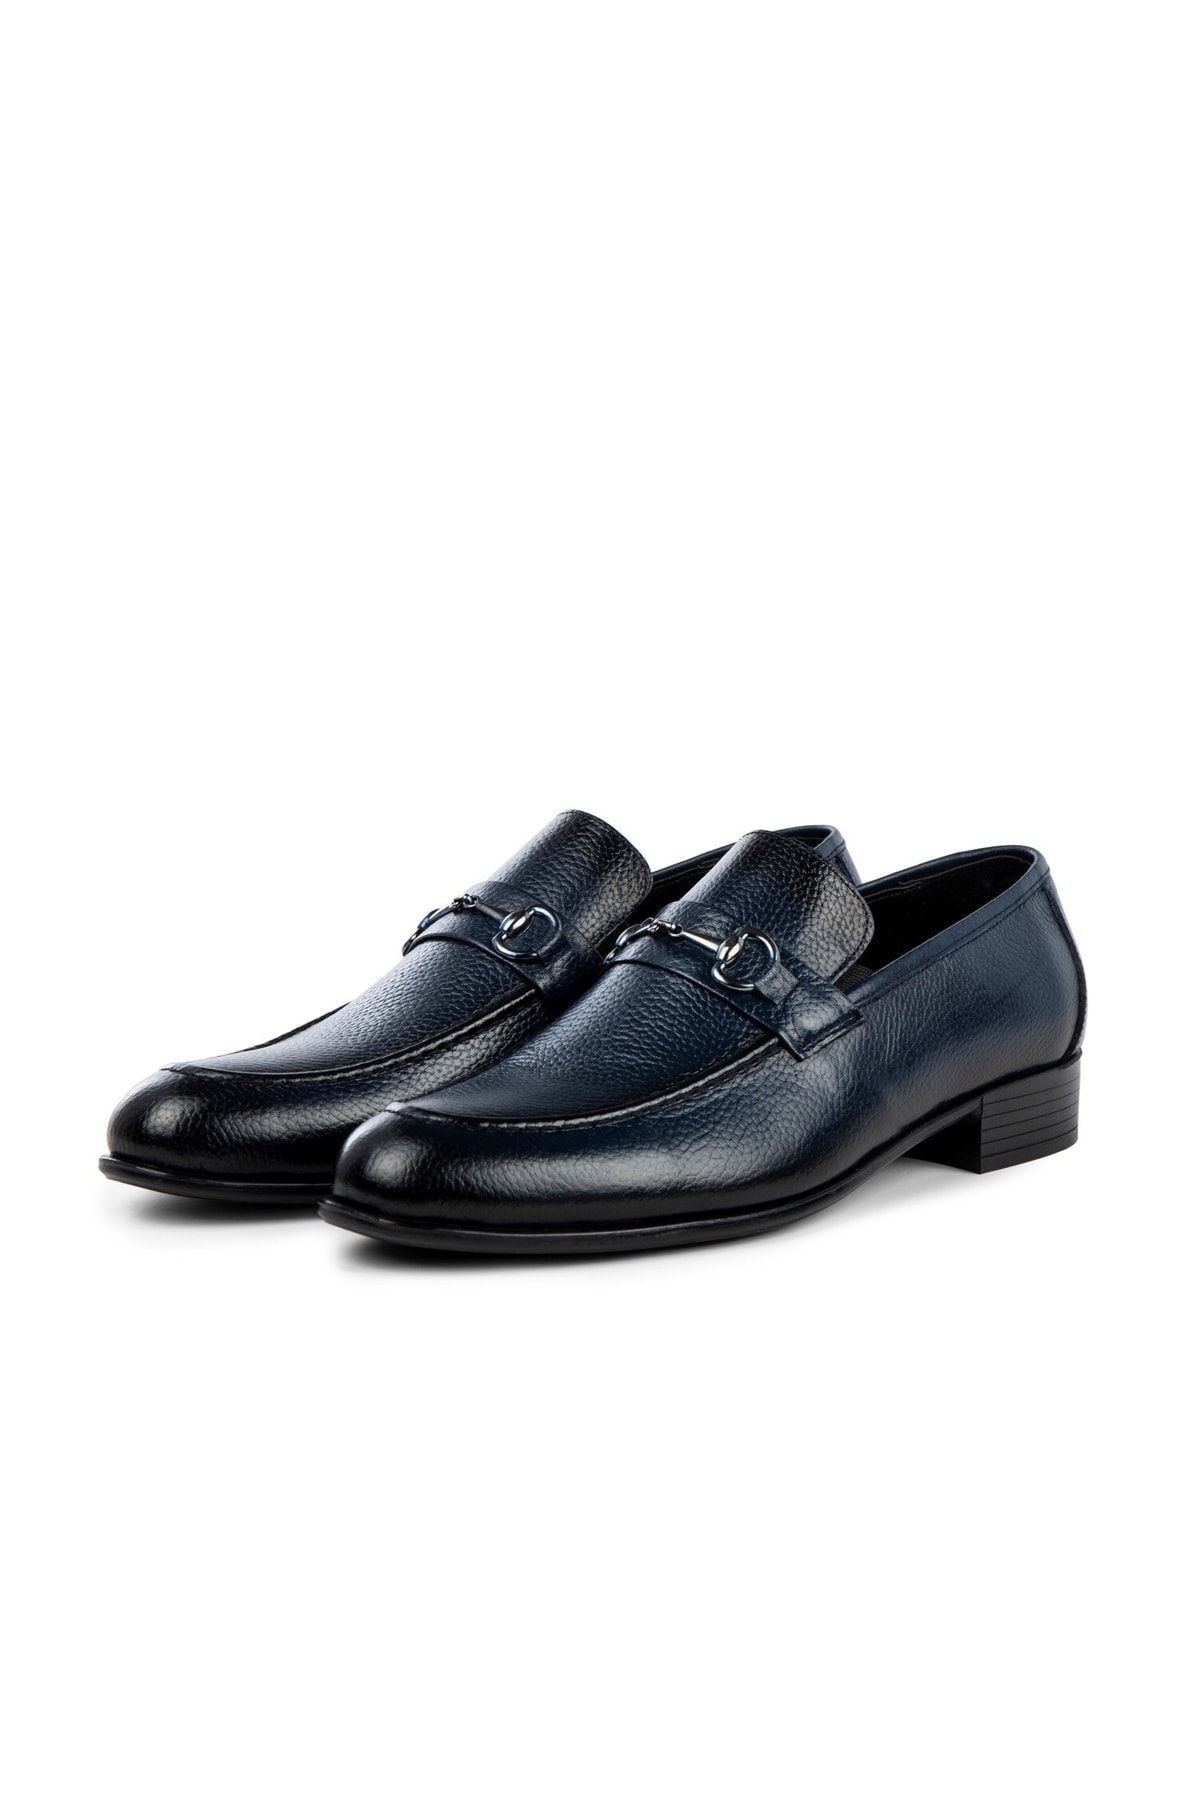 Levně Ducavelli Sidro Genuine Leather Men's Classic Shoes, Loafers Classic Shoes, Loafers.